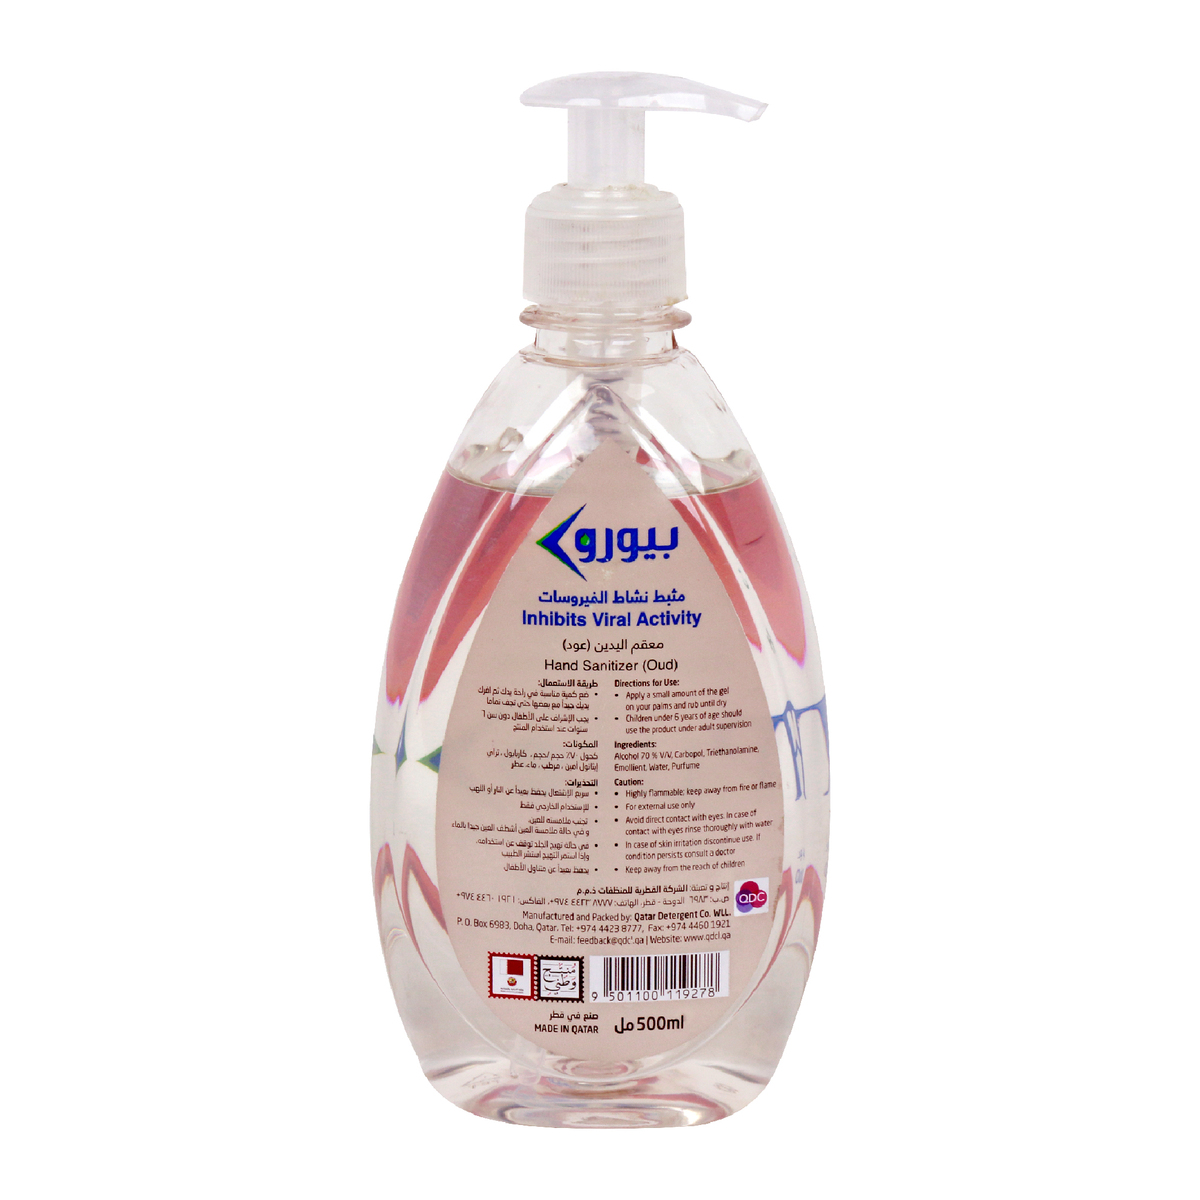 Puro Anti-Bacterial Hand Sanitizer Oud 500ml